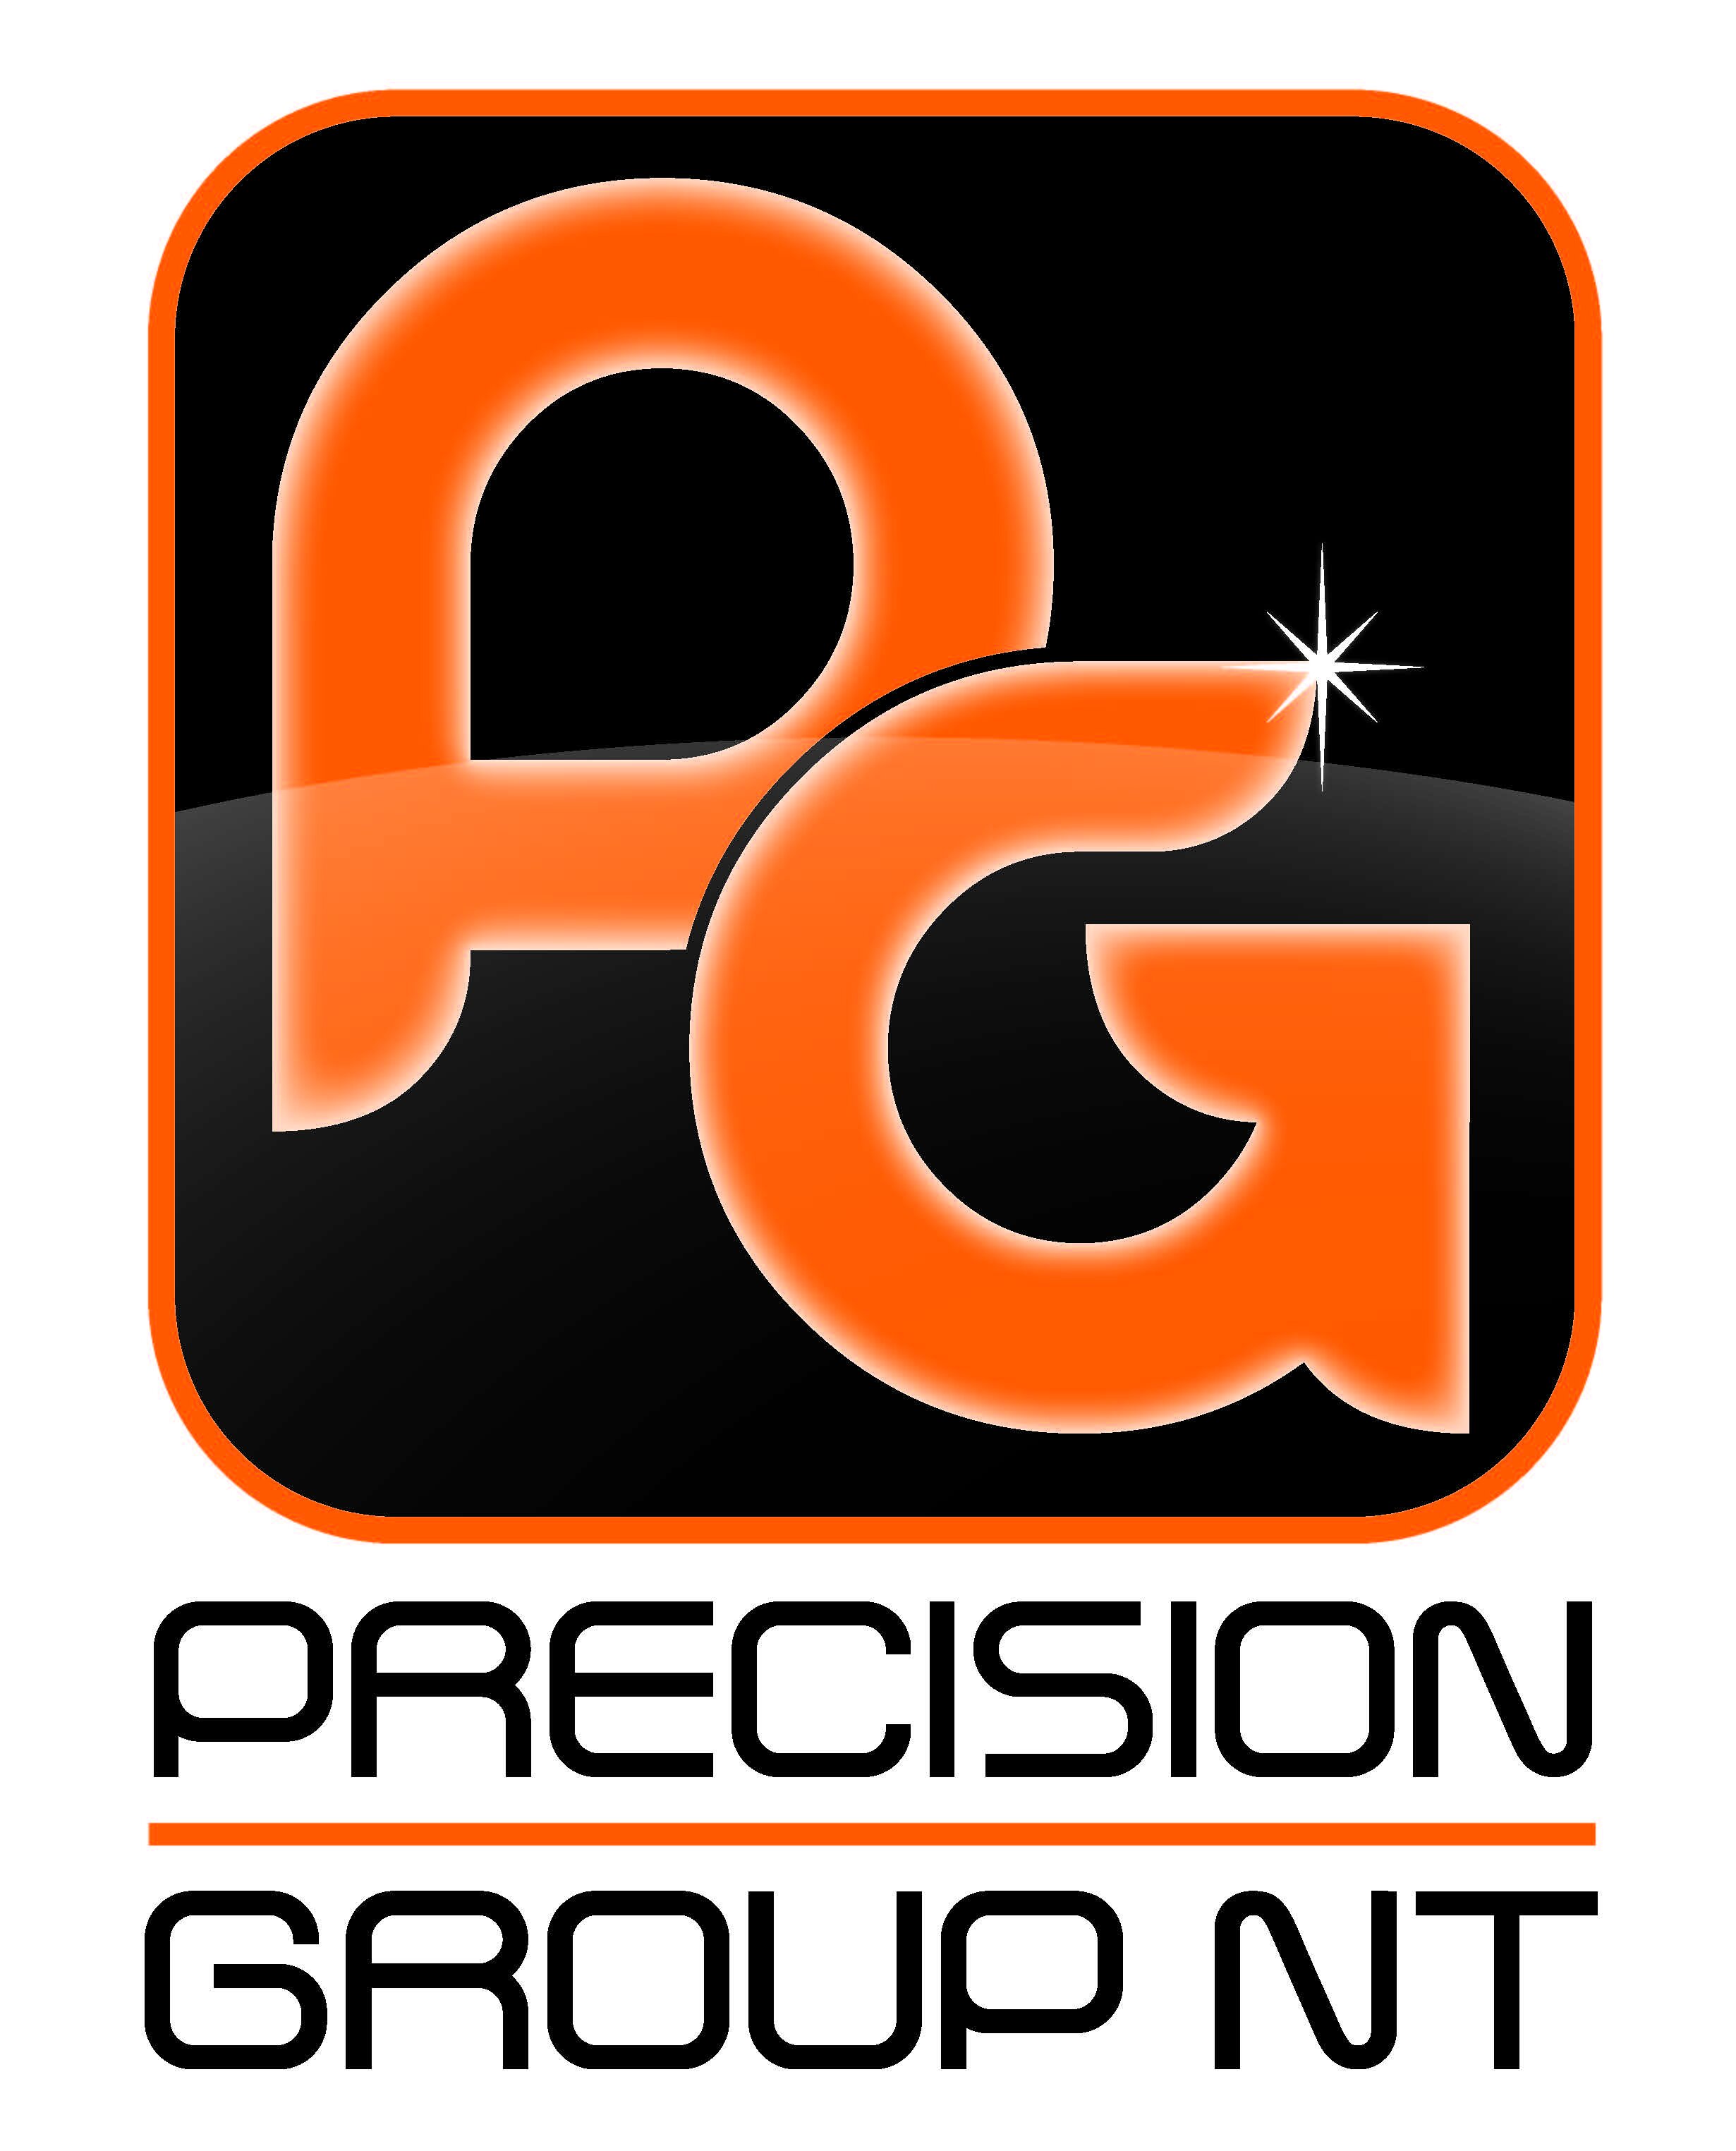 Precision Group logo.jpg